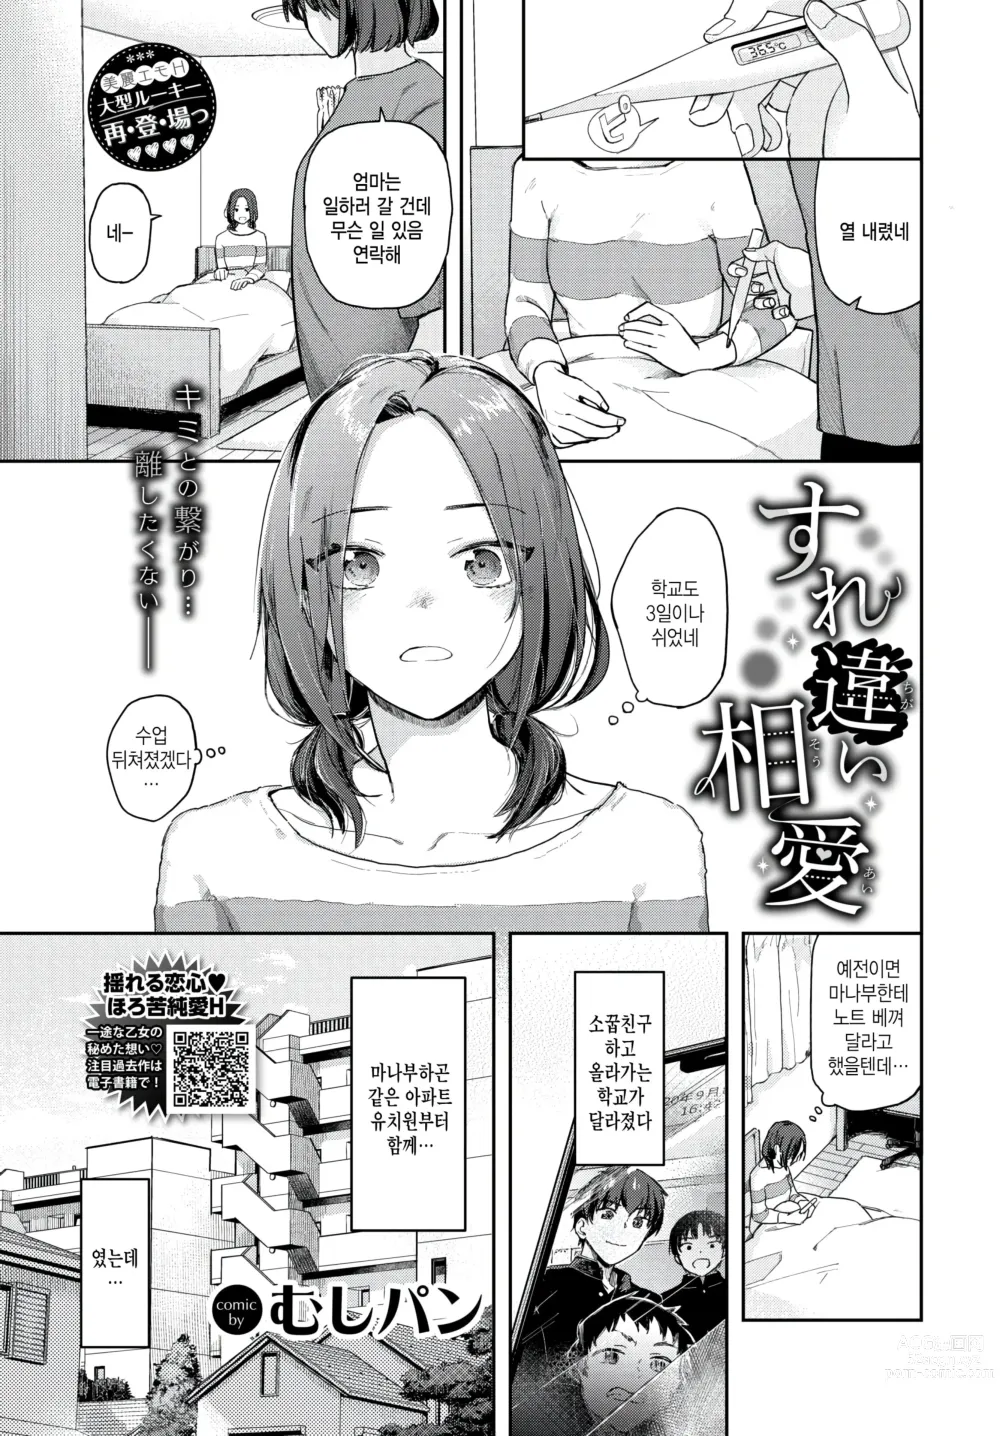 Page 1 of manga Surechigai Souai